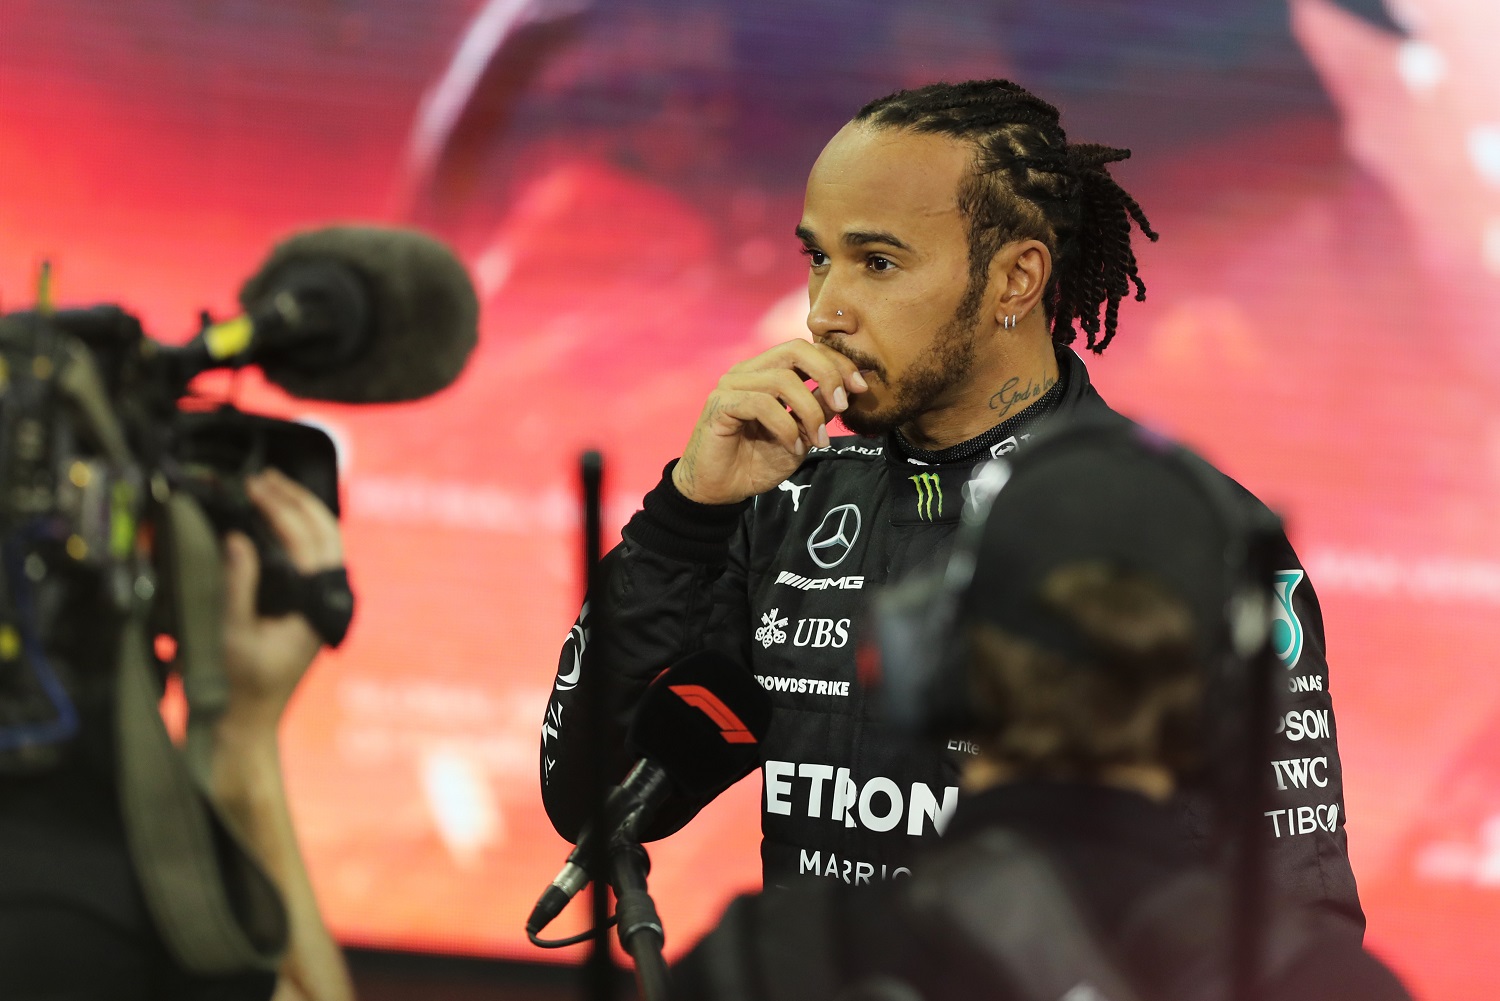 Lewis Hamilton of Mercedes GP talks to the media in parc ferme following the Formula 1 Grand Prix of Abu Dhabi at Yas Marina Circuit on Dec. 12, 2021, in Abu Dhabi, United Arab Emirates.